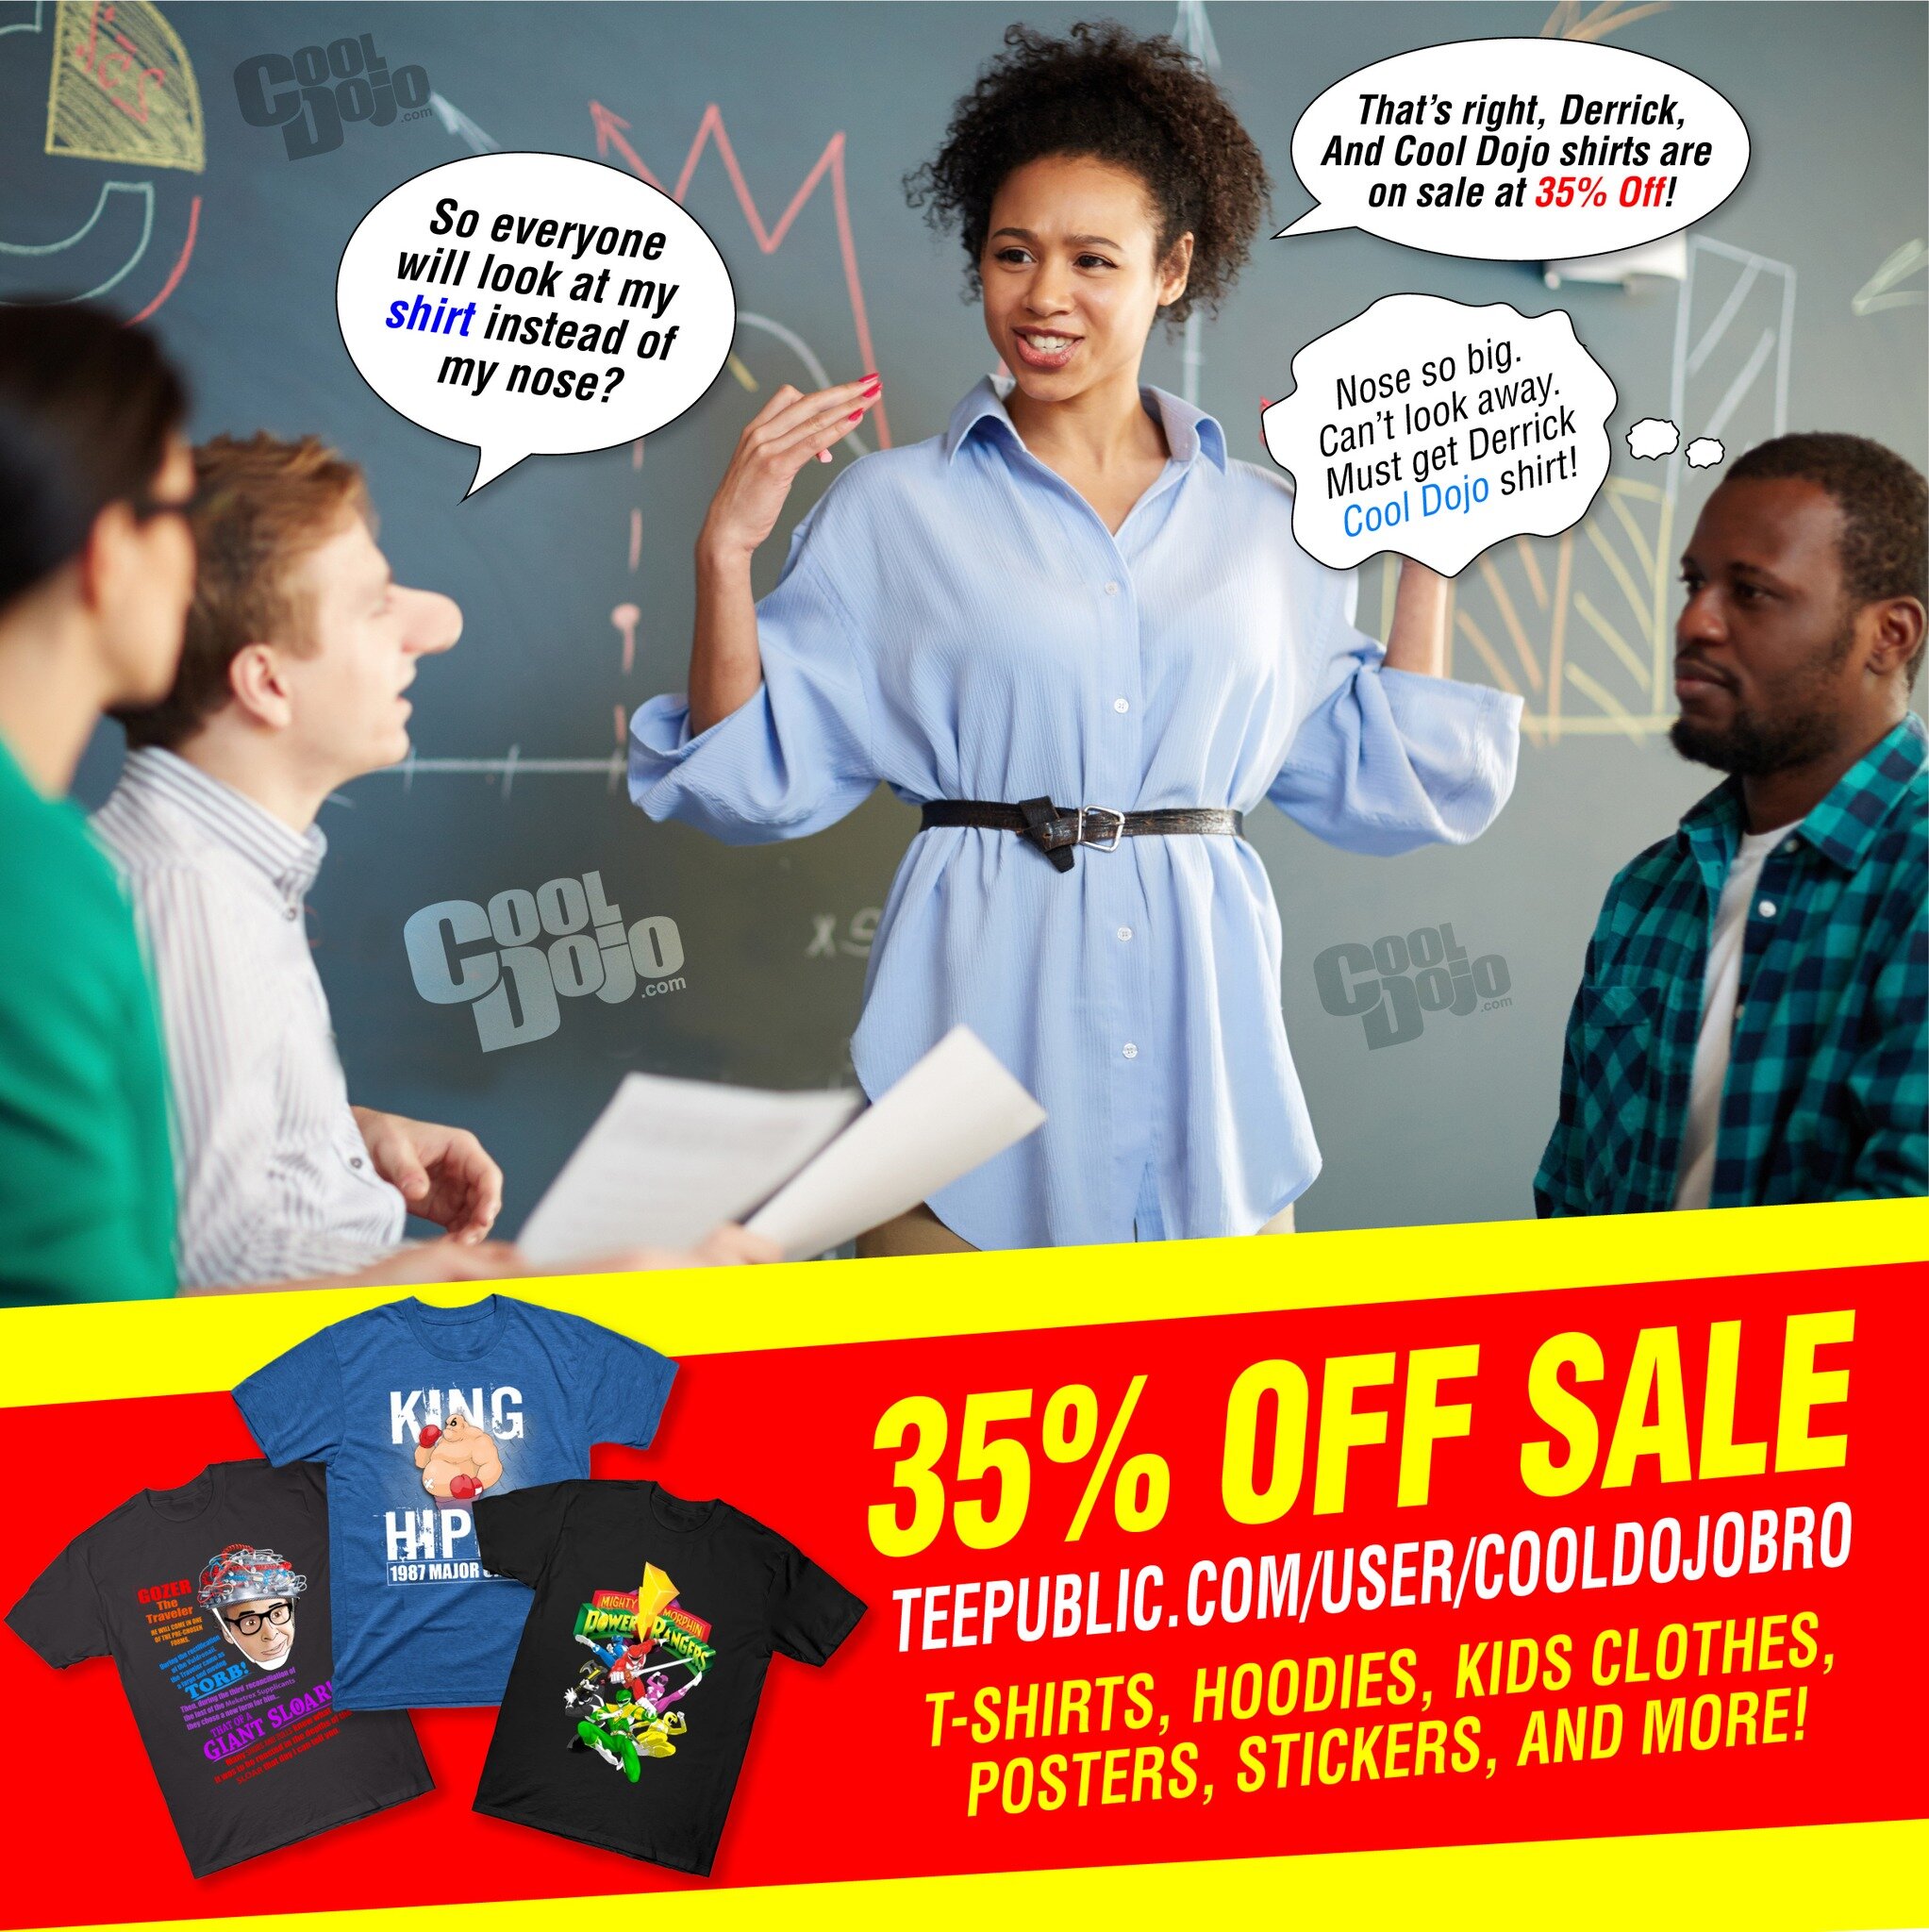 Back to School Sale!! Get up to 35% OFF when you shop now at teepublic.com/user/cooldojobro ... #teepublic #cooldojo #backtoschoolsale